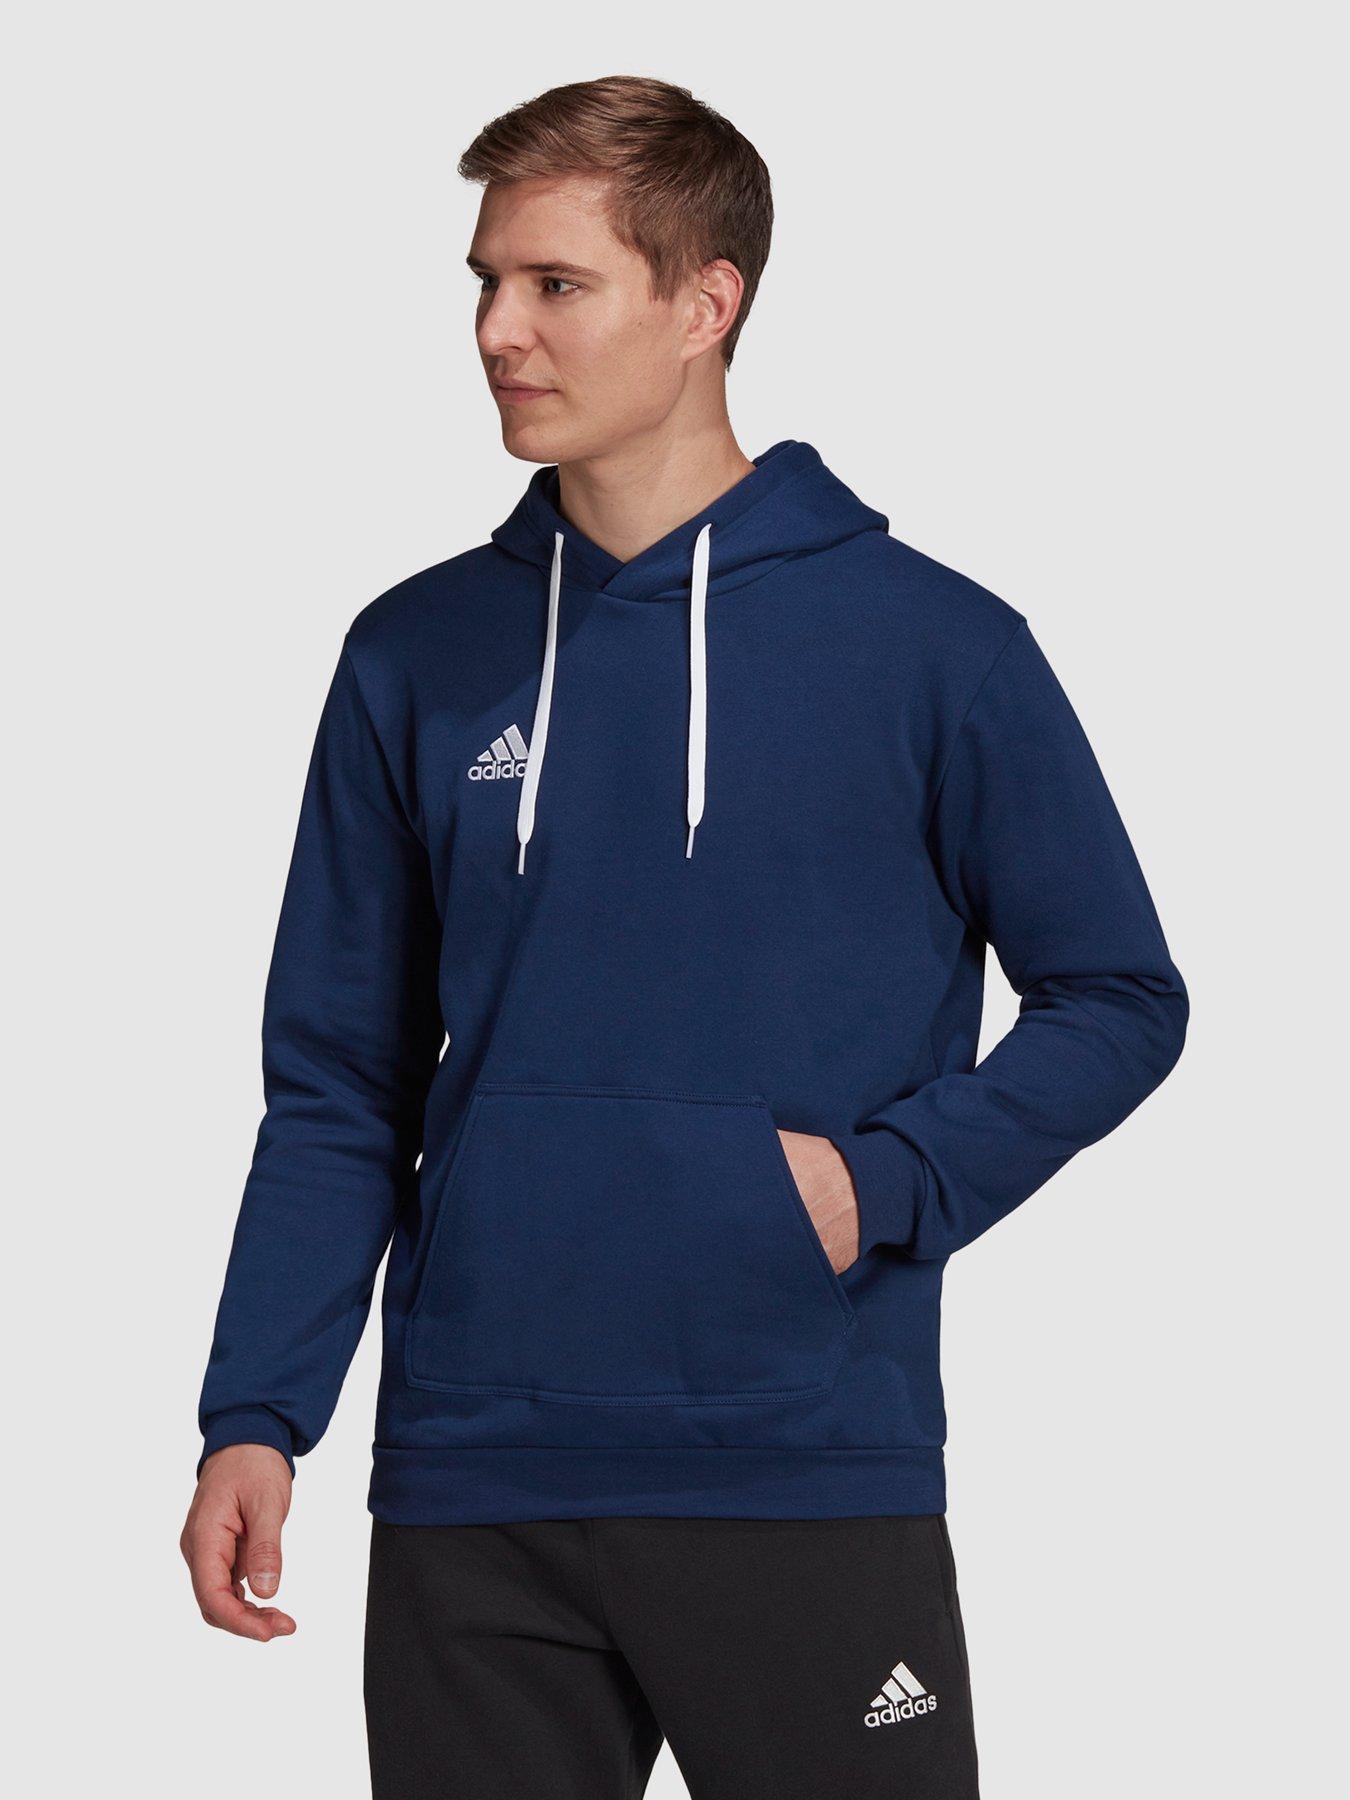 Hoodies | Adidas | Ireland | | sweatshirts Men Hoodies & Very